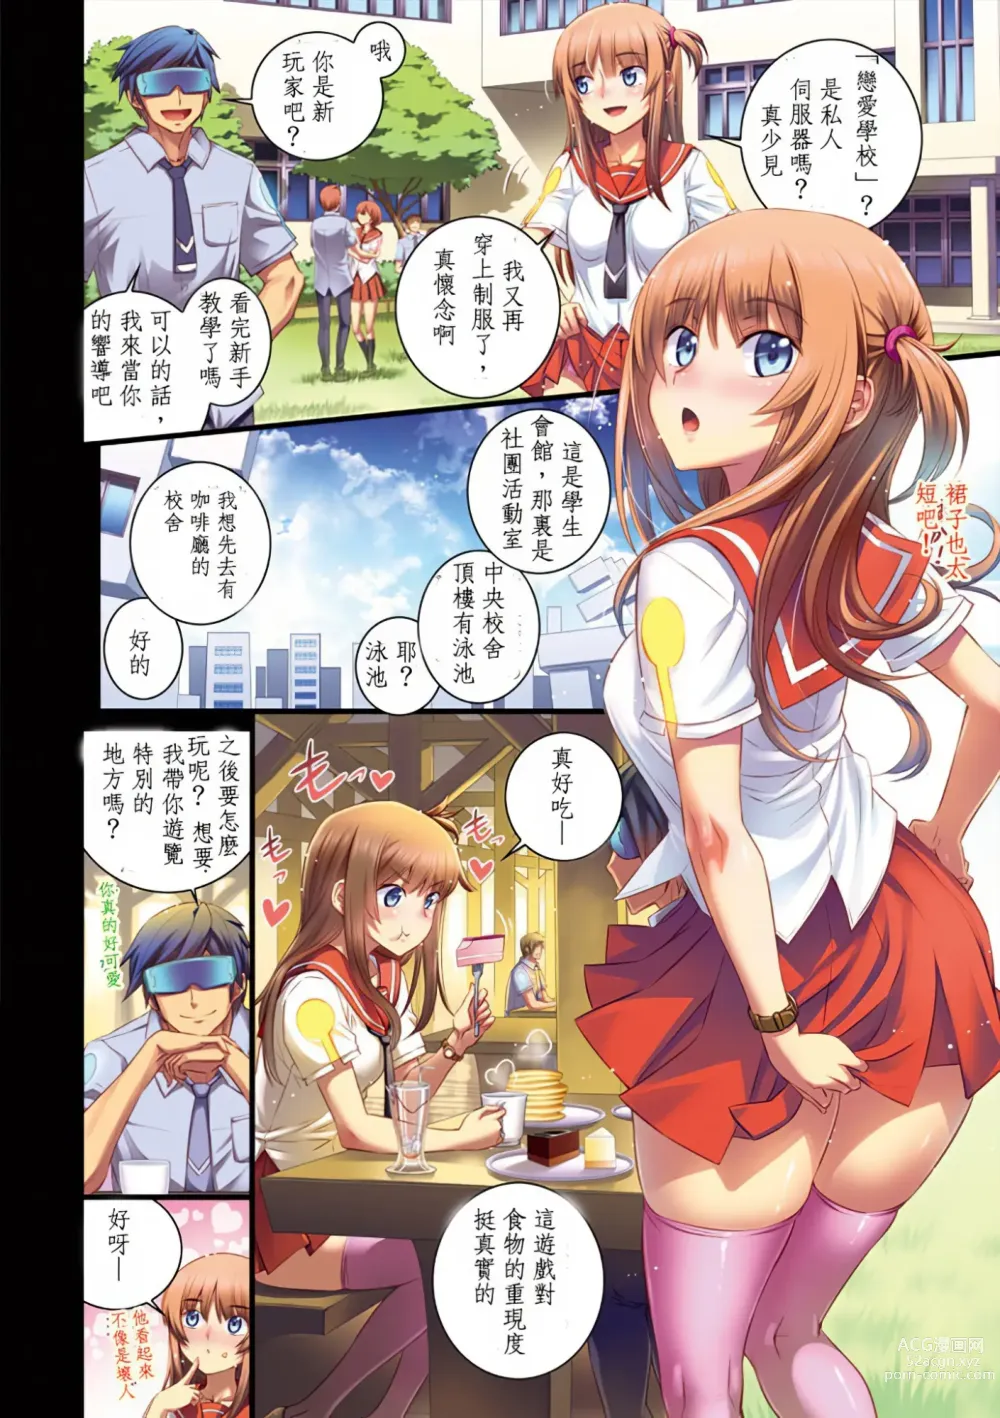 Page 7 of manga School love.net (uncensored)